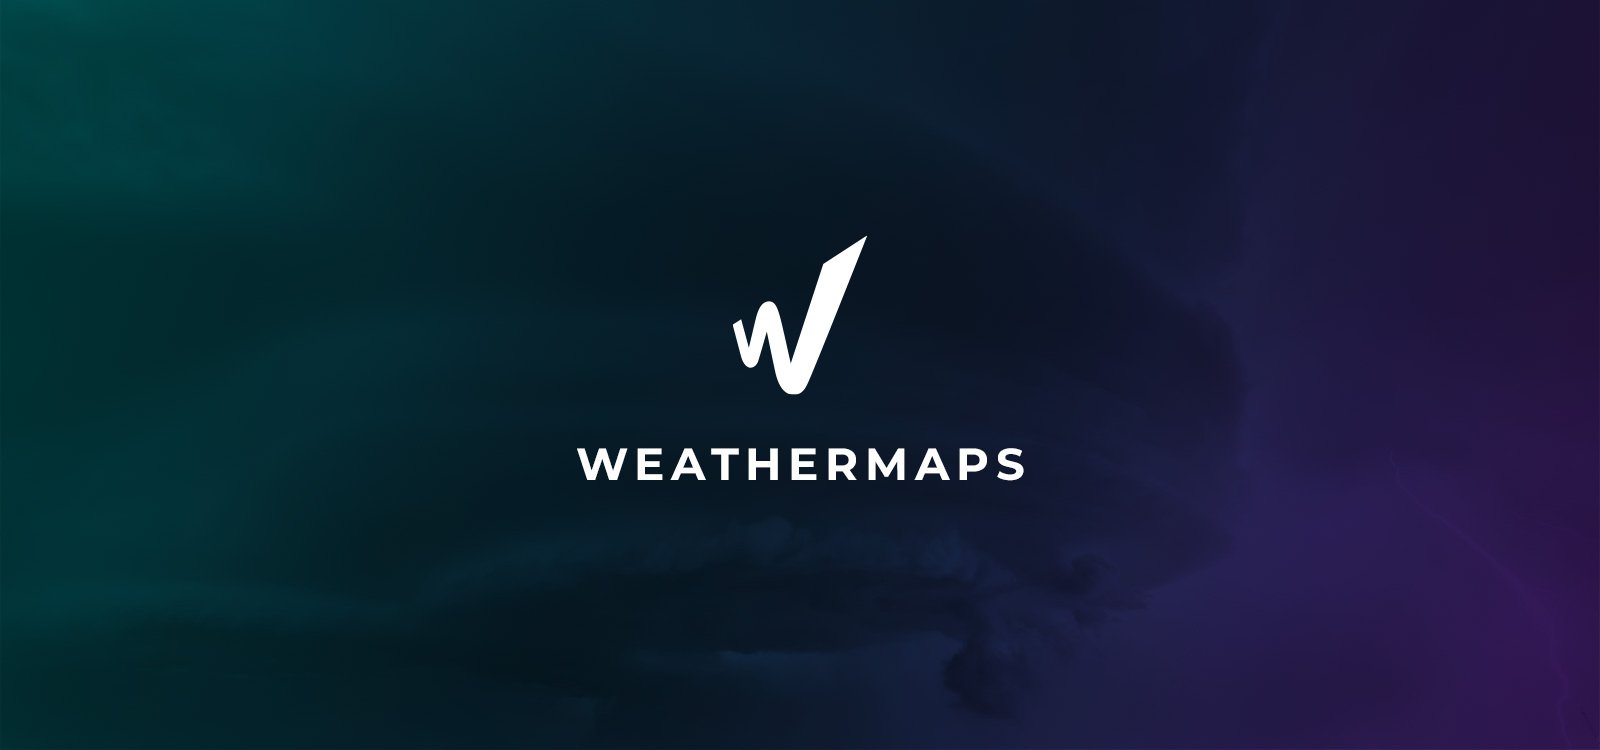 weathermaps.jpg